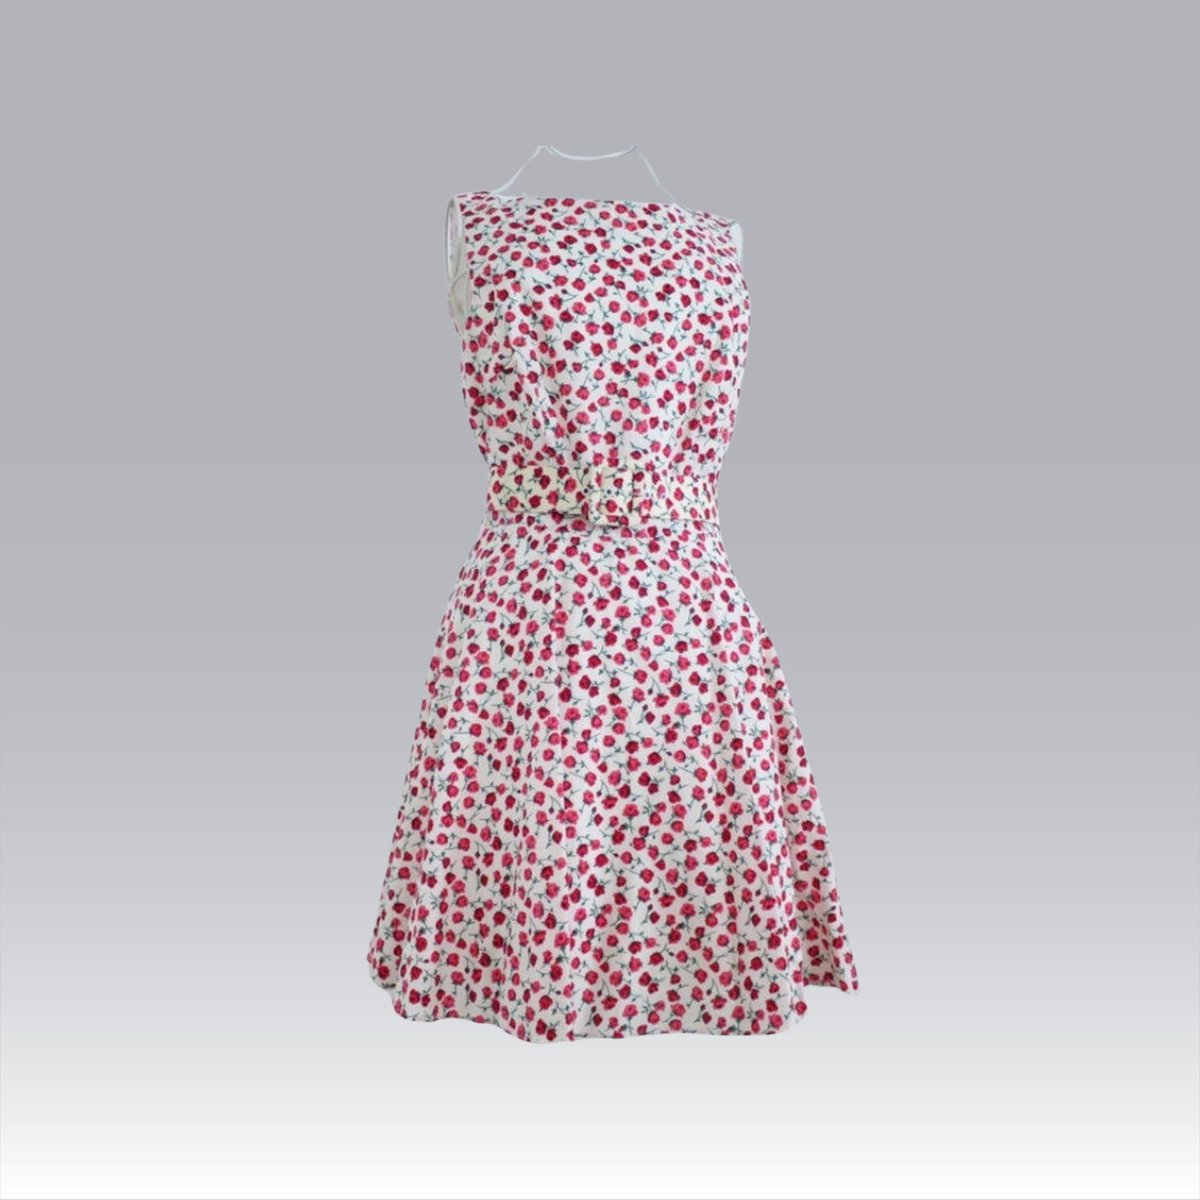 Vintage Sleeveless Mini Sun Dress, Petite Pink Rose Swing Dress, Ladies Sz 6 tuppu.net/1492820f #SwirlingOrange11 #VintageFun #Etsyteamunity #SMILEtt23